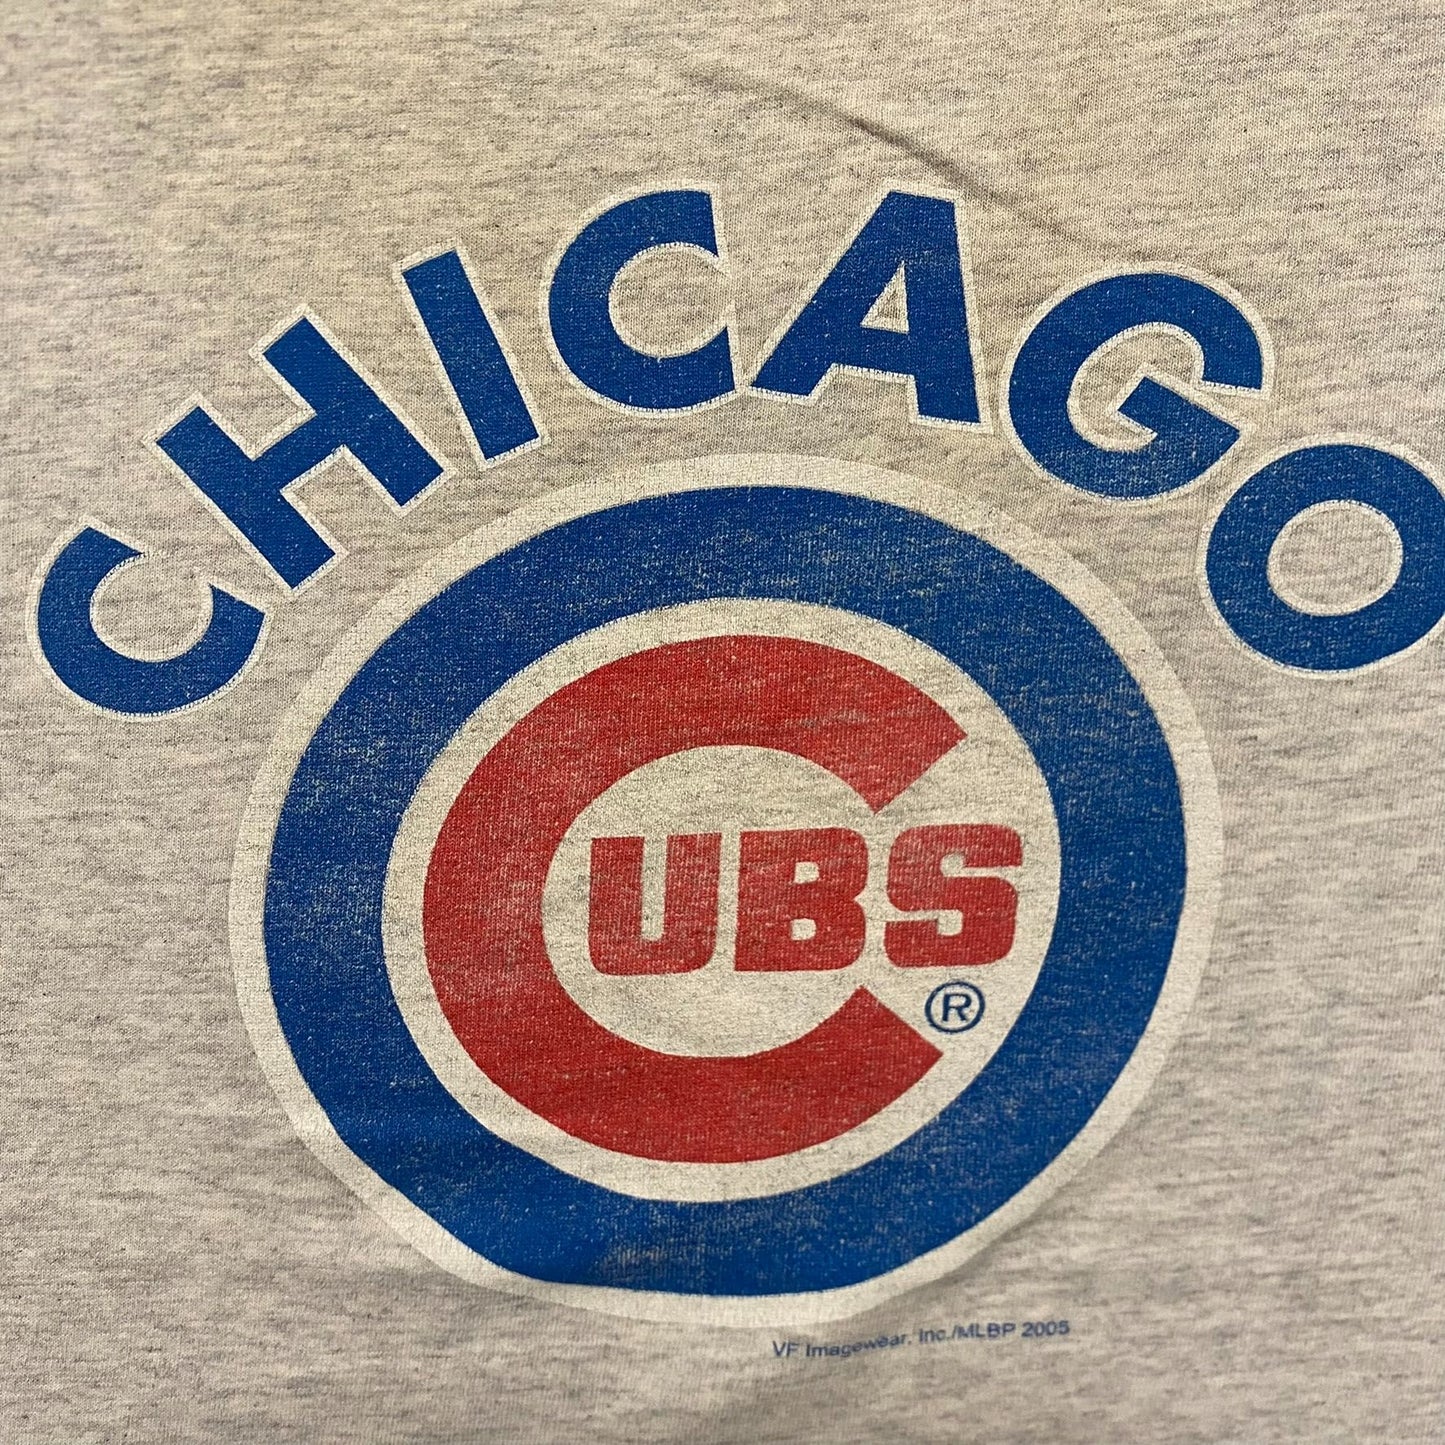 Vintage Y2K Chicago Cubs Baseball Logo Essential Sports Tee